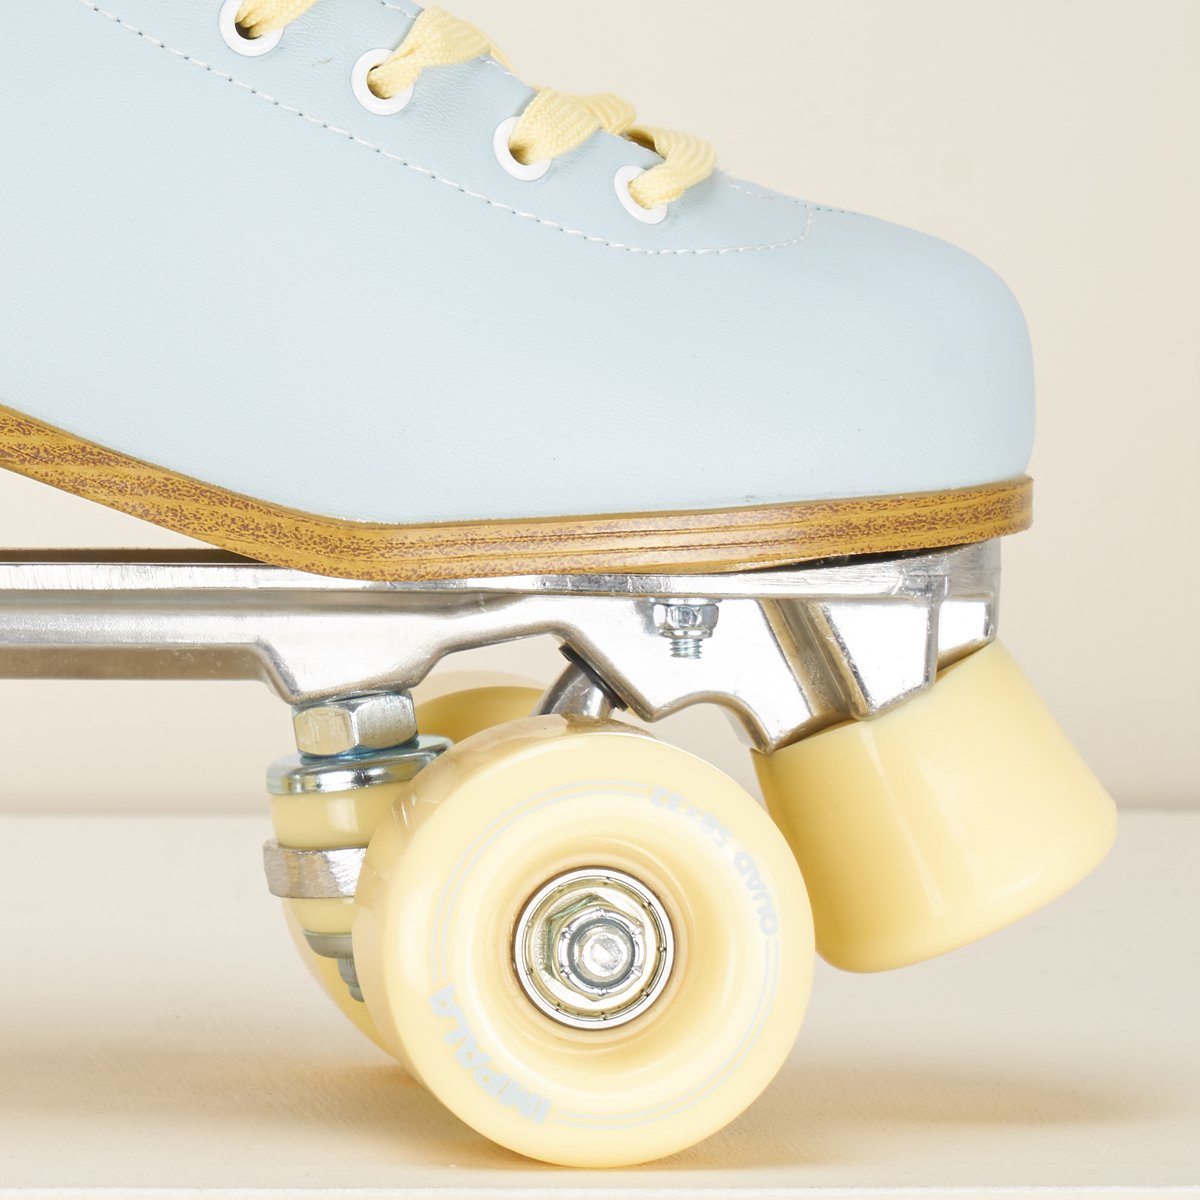 Impala Roller Skates - Sky Blue / Yellow